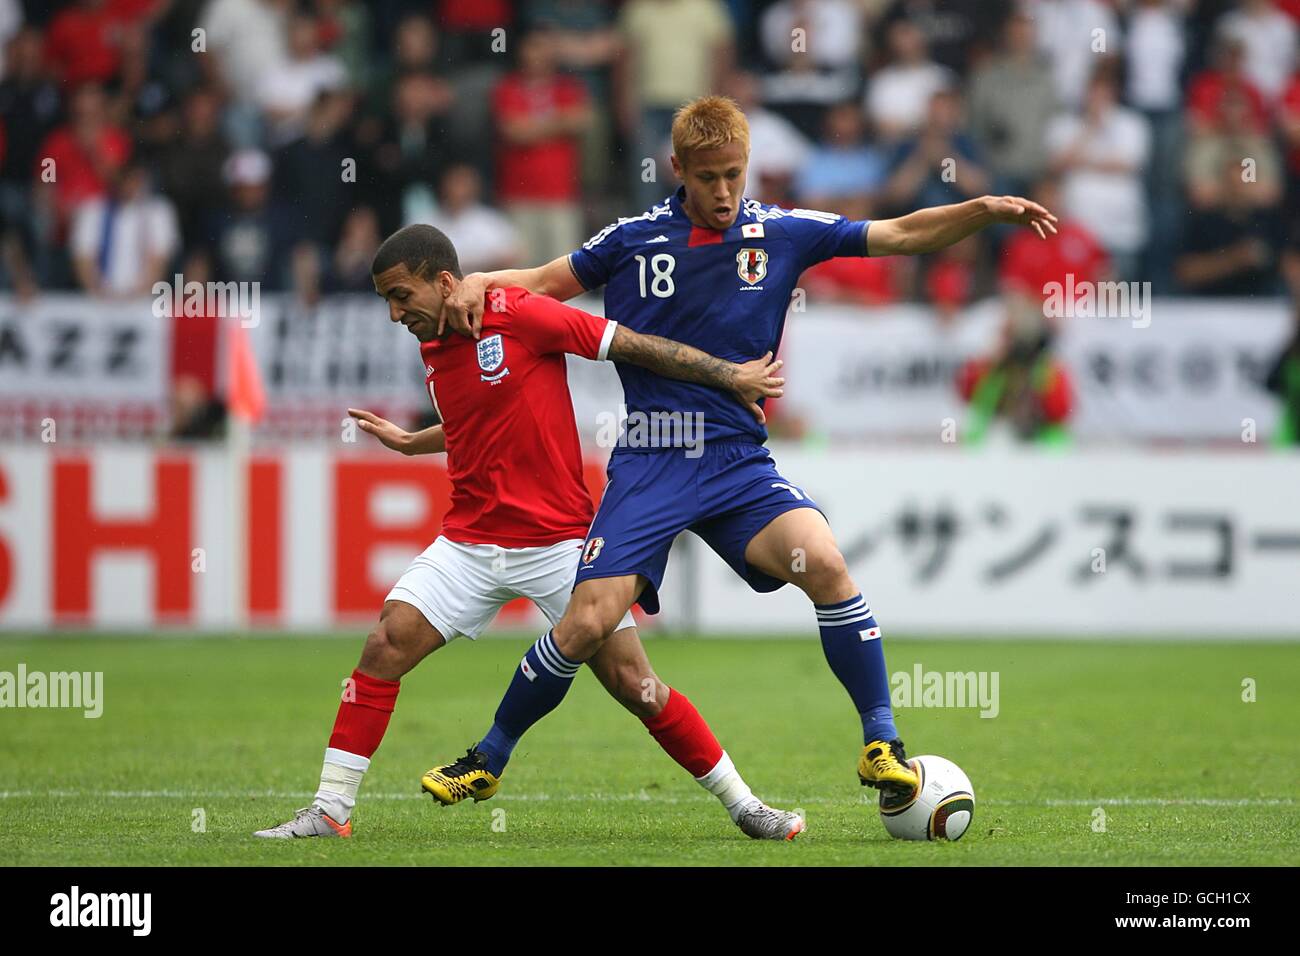 Soccer - International Friendly - Japan v England - UPC-Arena. Japan's Keisuke Honda (right) and England's Aaron Lennon (left) battle for the ball Stock Photo